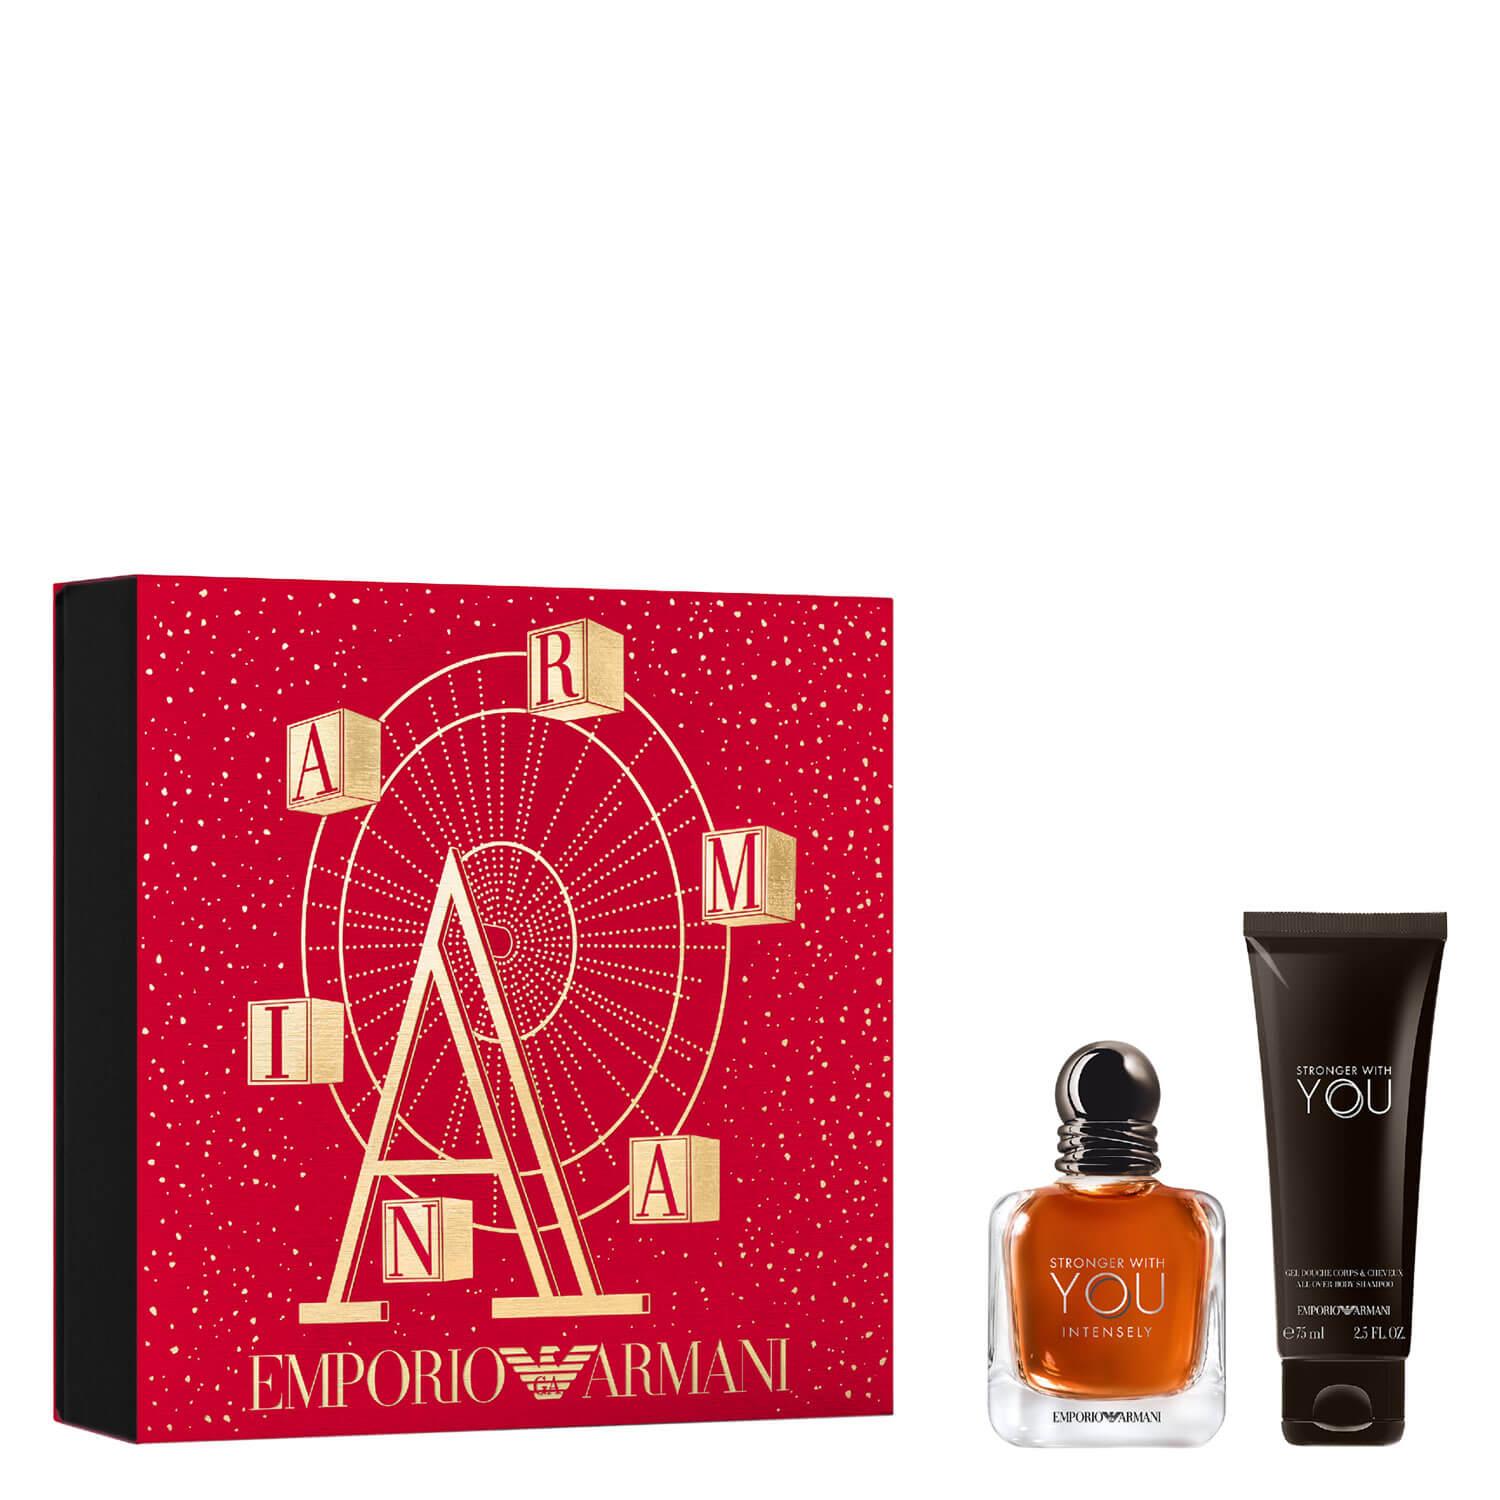 Emporio Armani - Stronger With You Intense Eau de Parfum Set